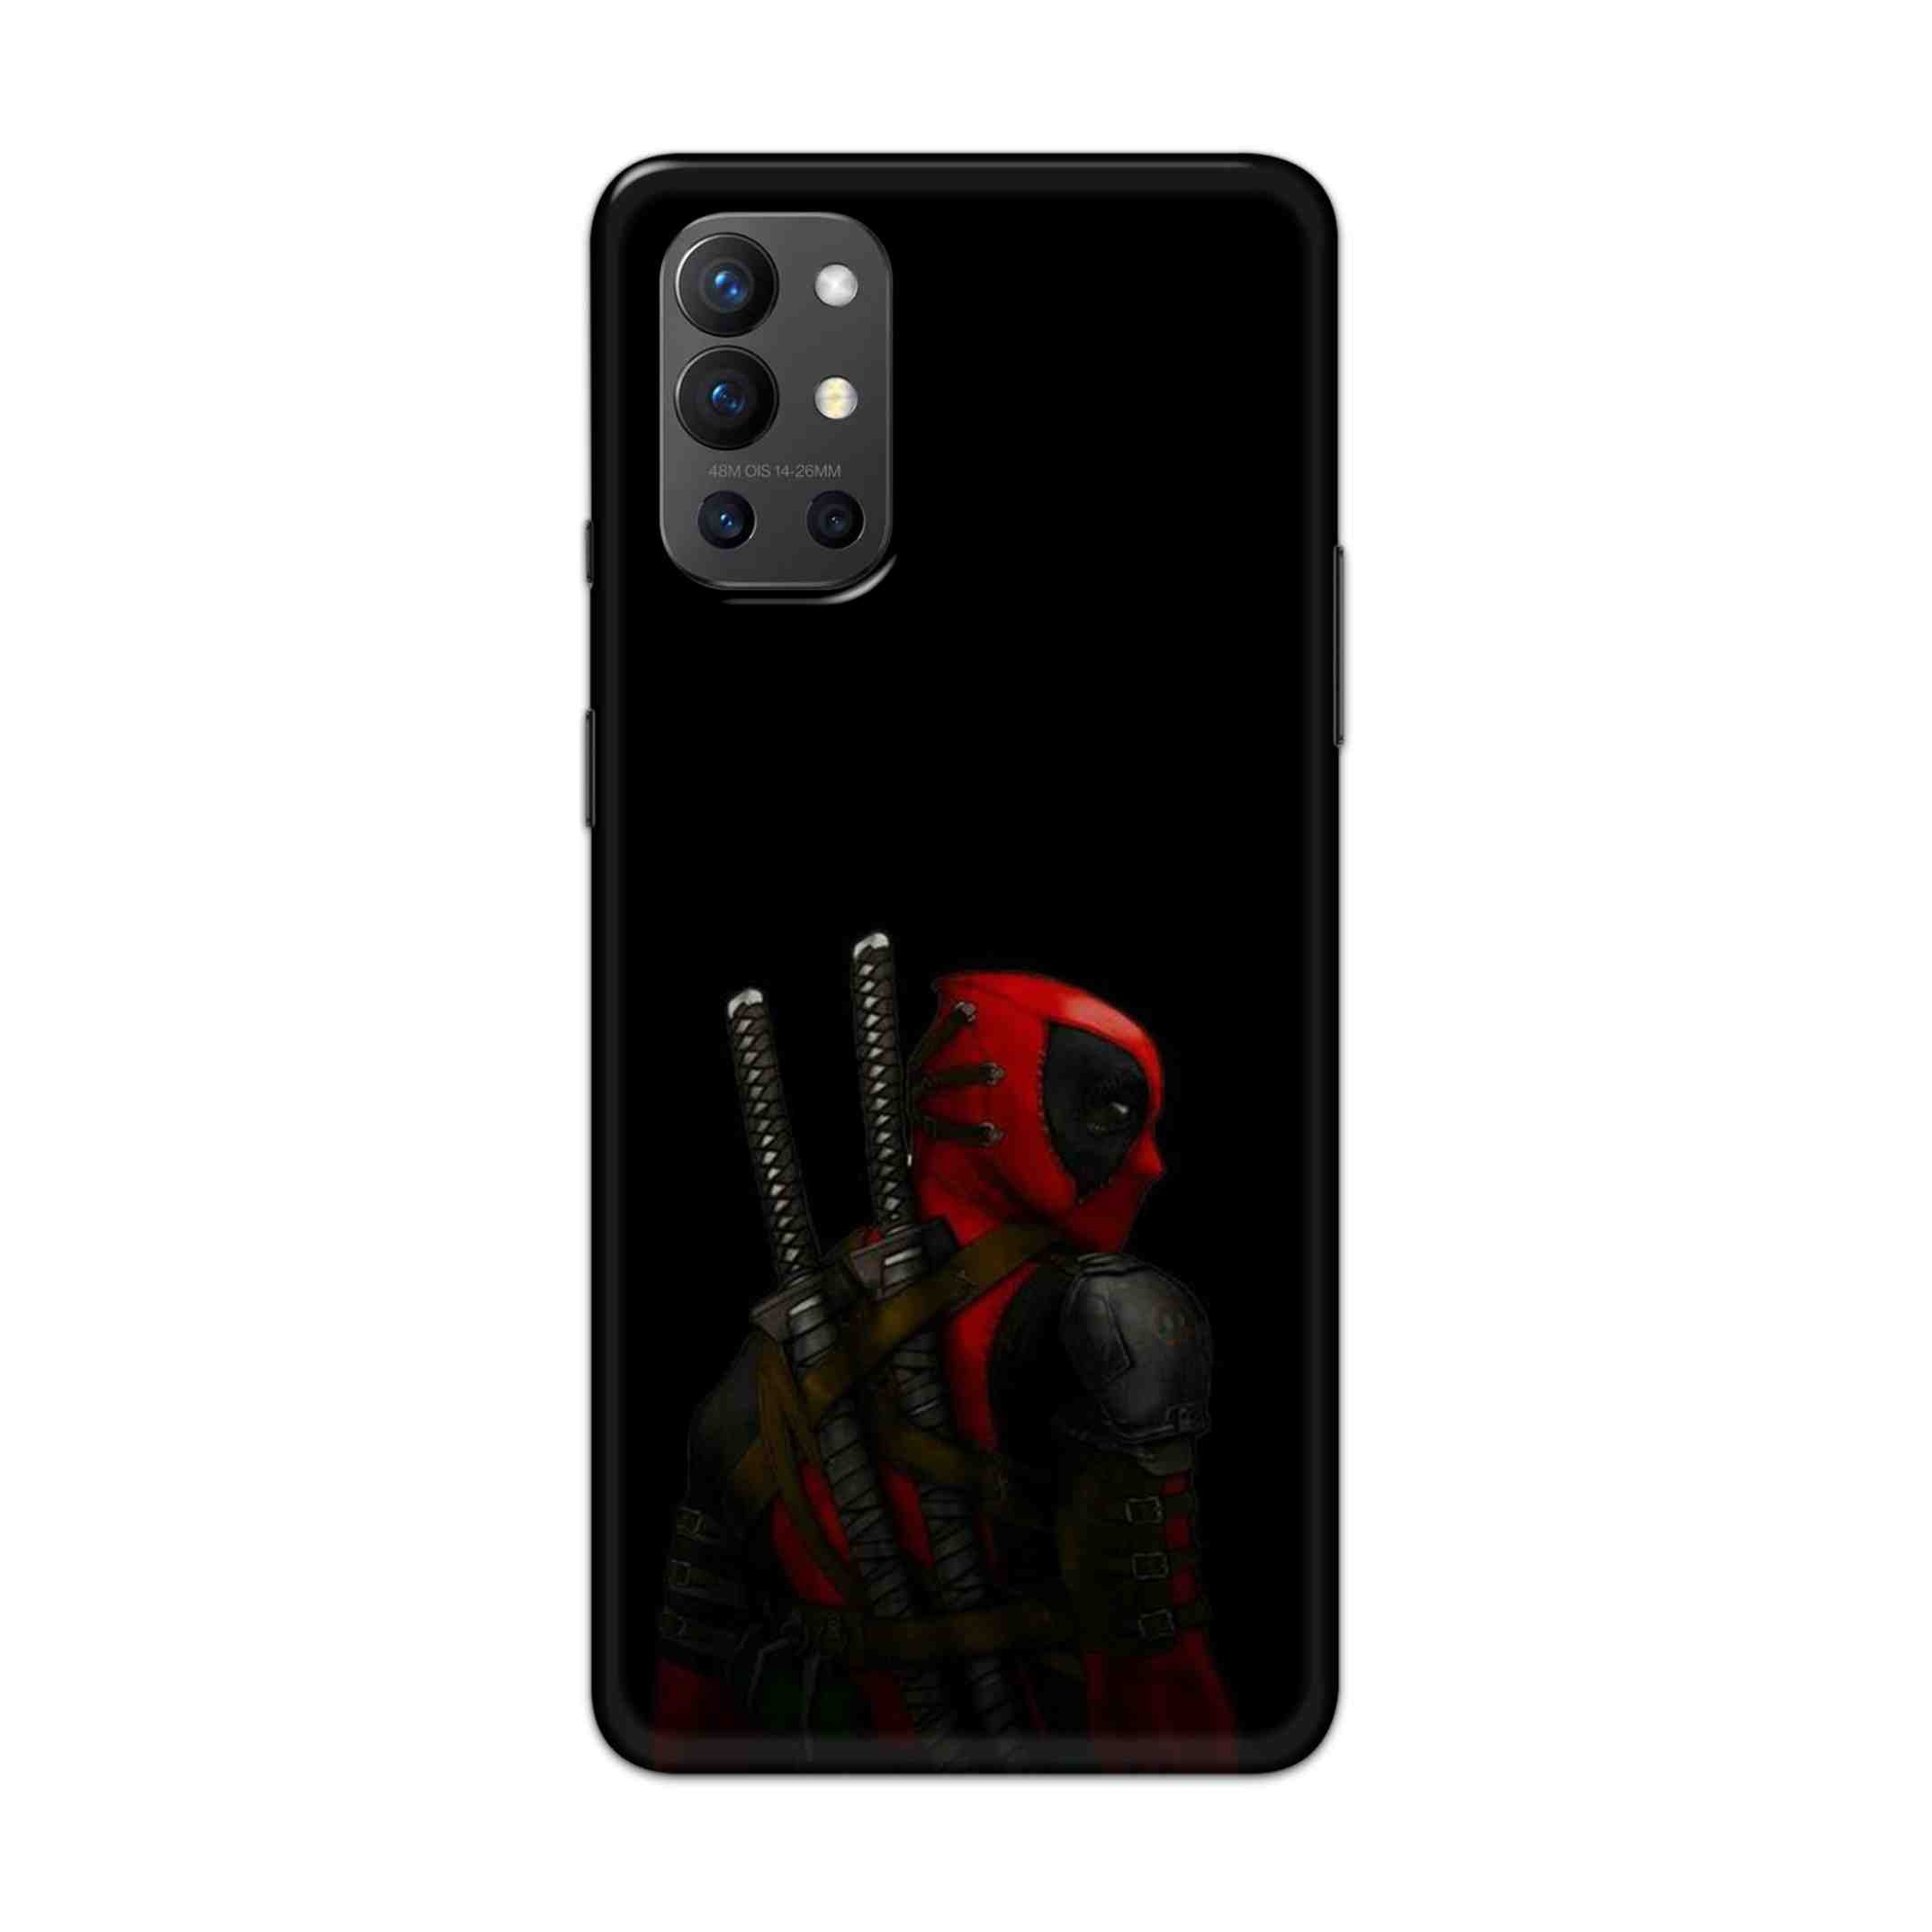 Buy Deadpool Hard Back Mobile Phone Case Cover For OnePlus 9R / 8T Online